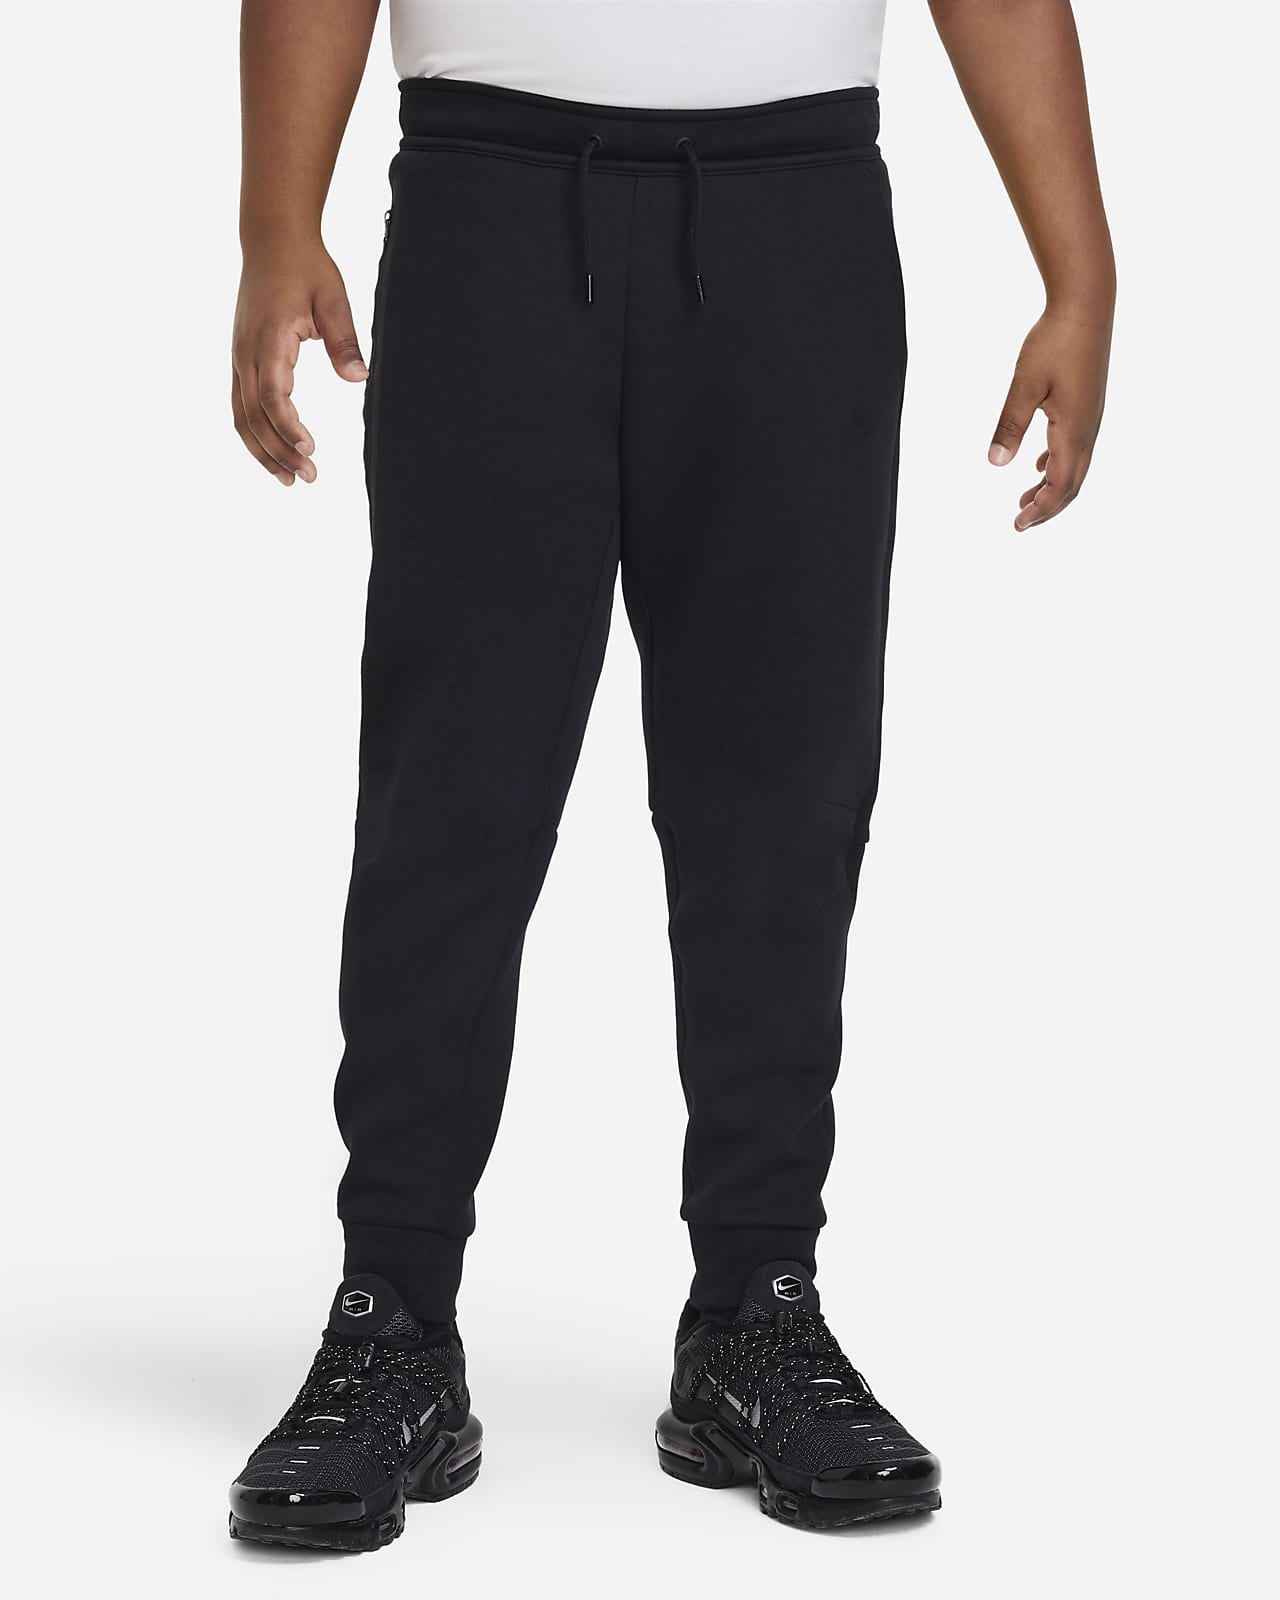 Byxor Nike Sportswear Tech Fleece för ungdom (killar) (utökade storlekar)